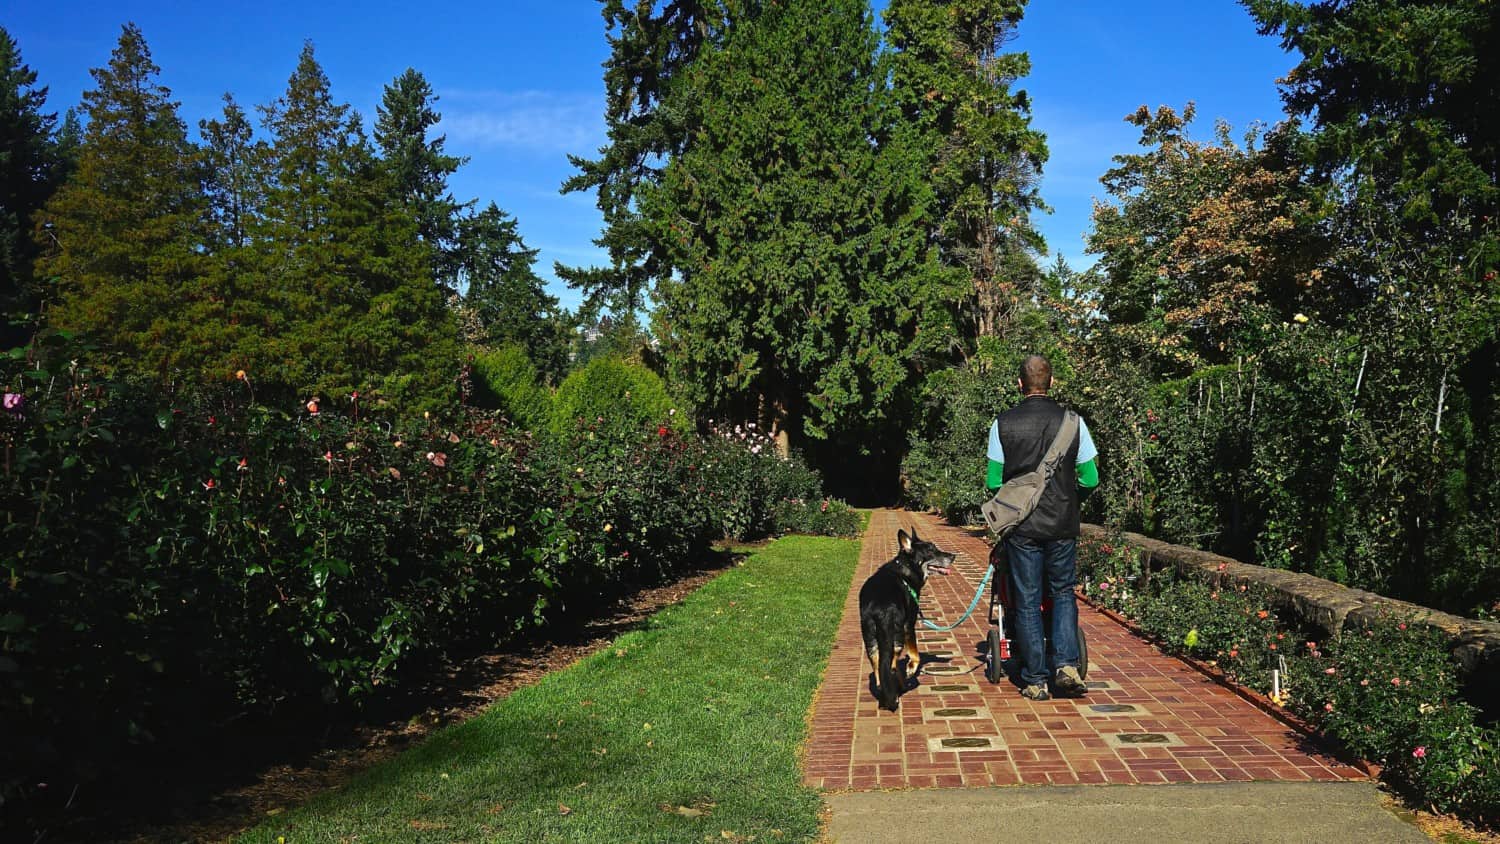 Oregon's Top Pet Friendly Attraction: Portland's Parks | GoPetFriendly.com